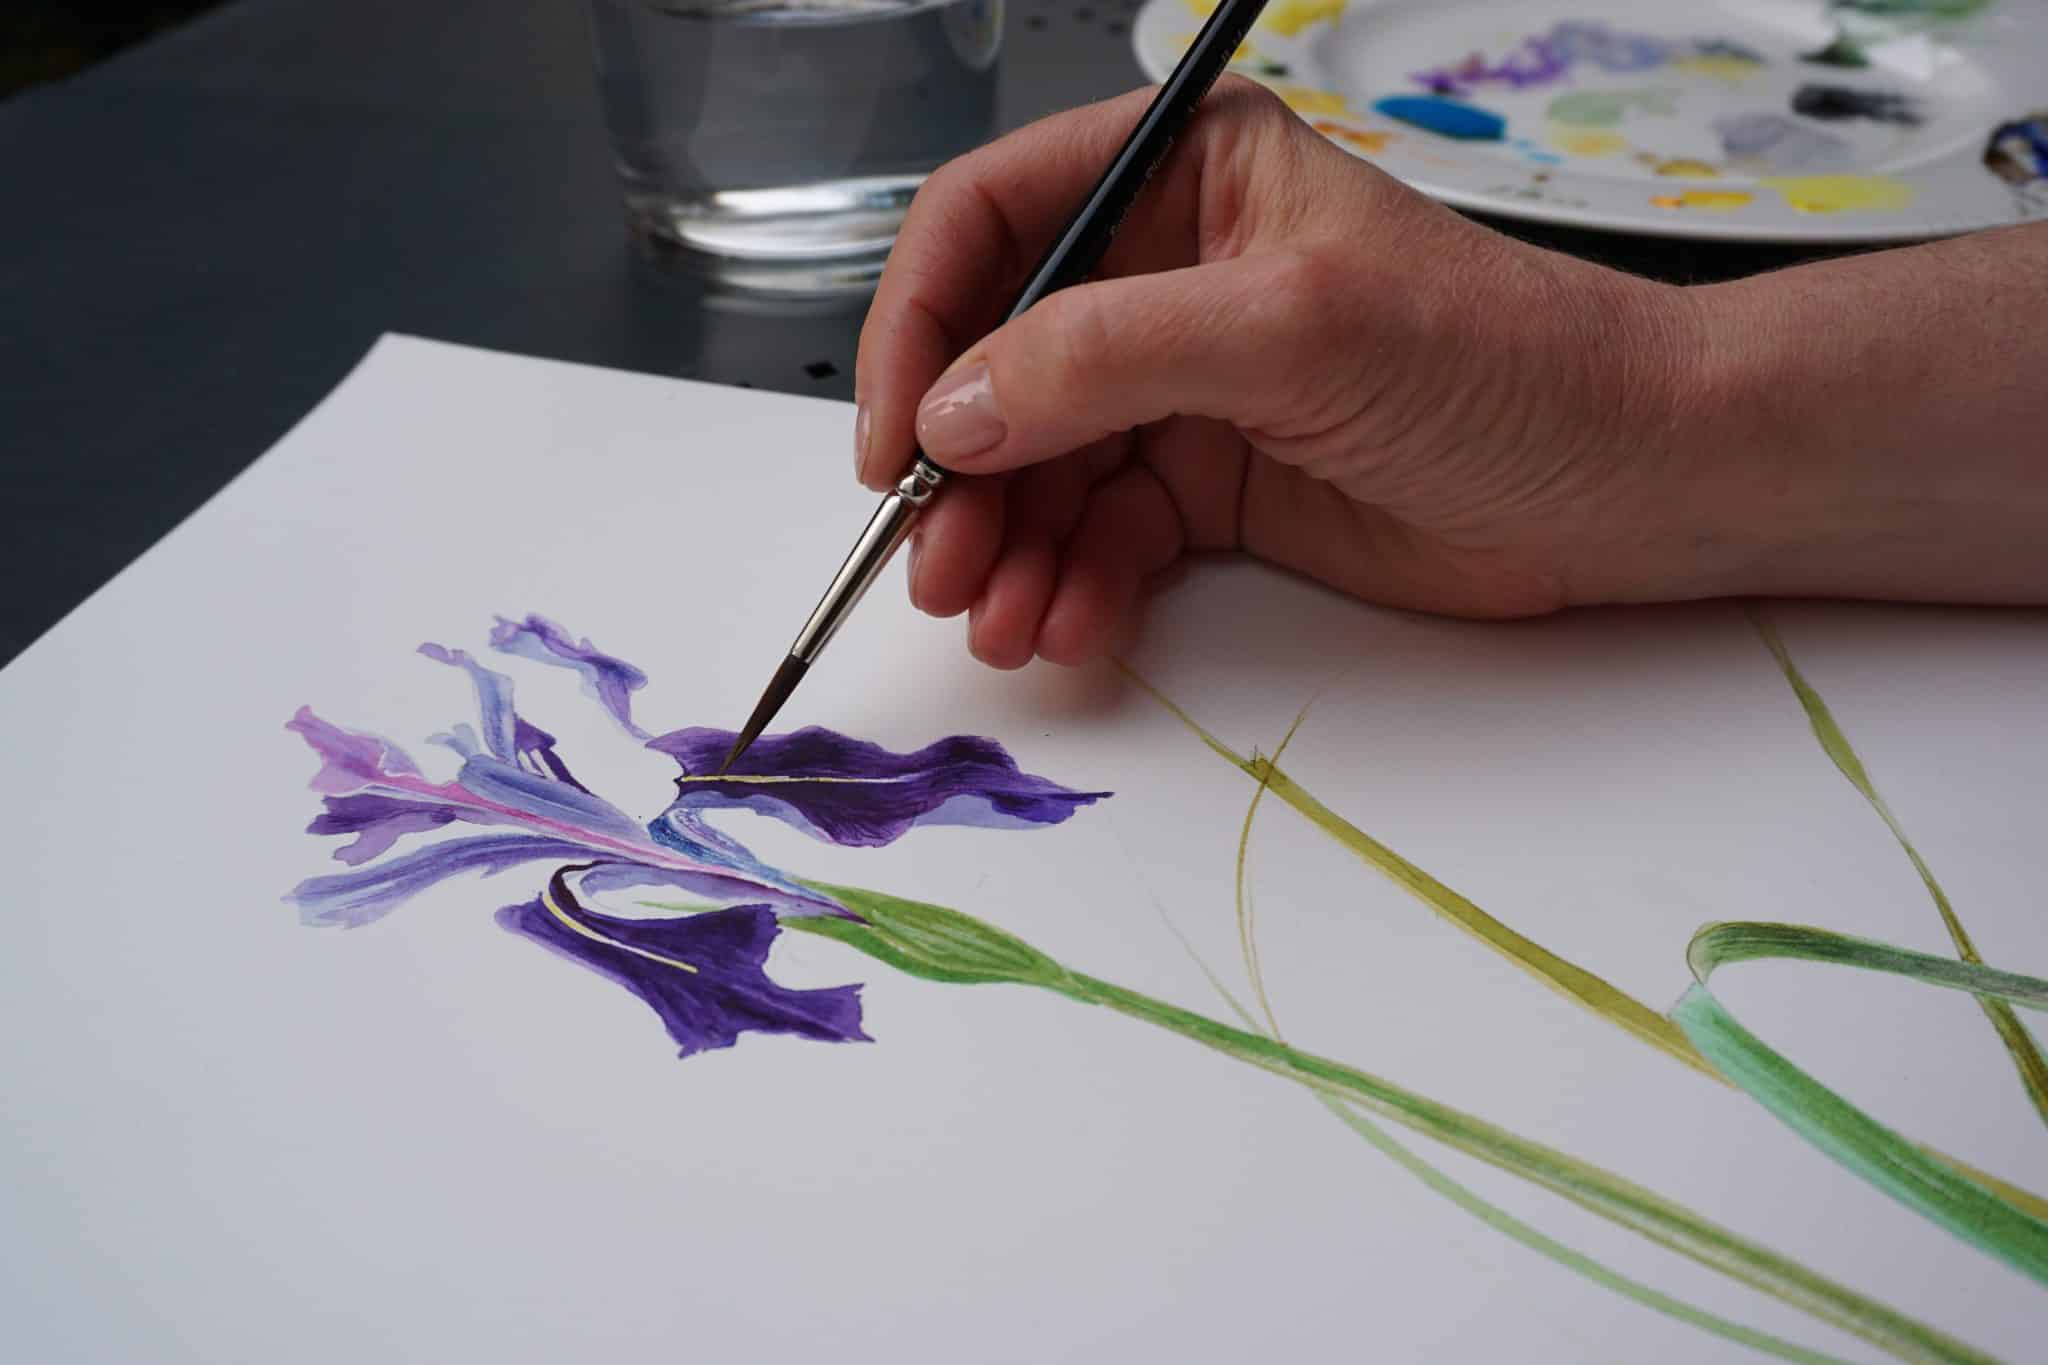 Iris chrysographes mano che dipinge con tavolozza